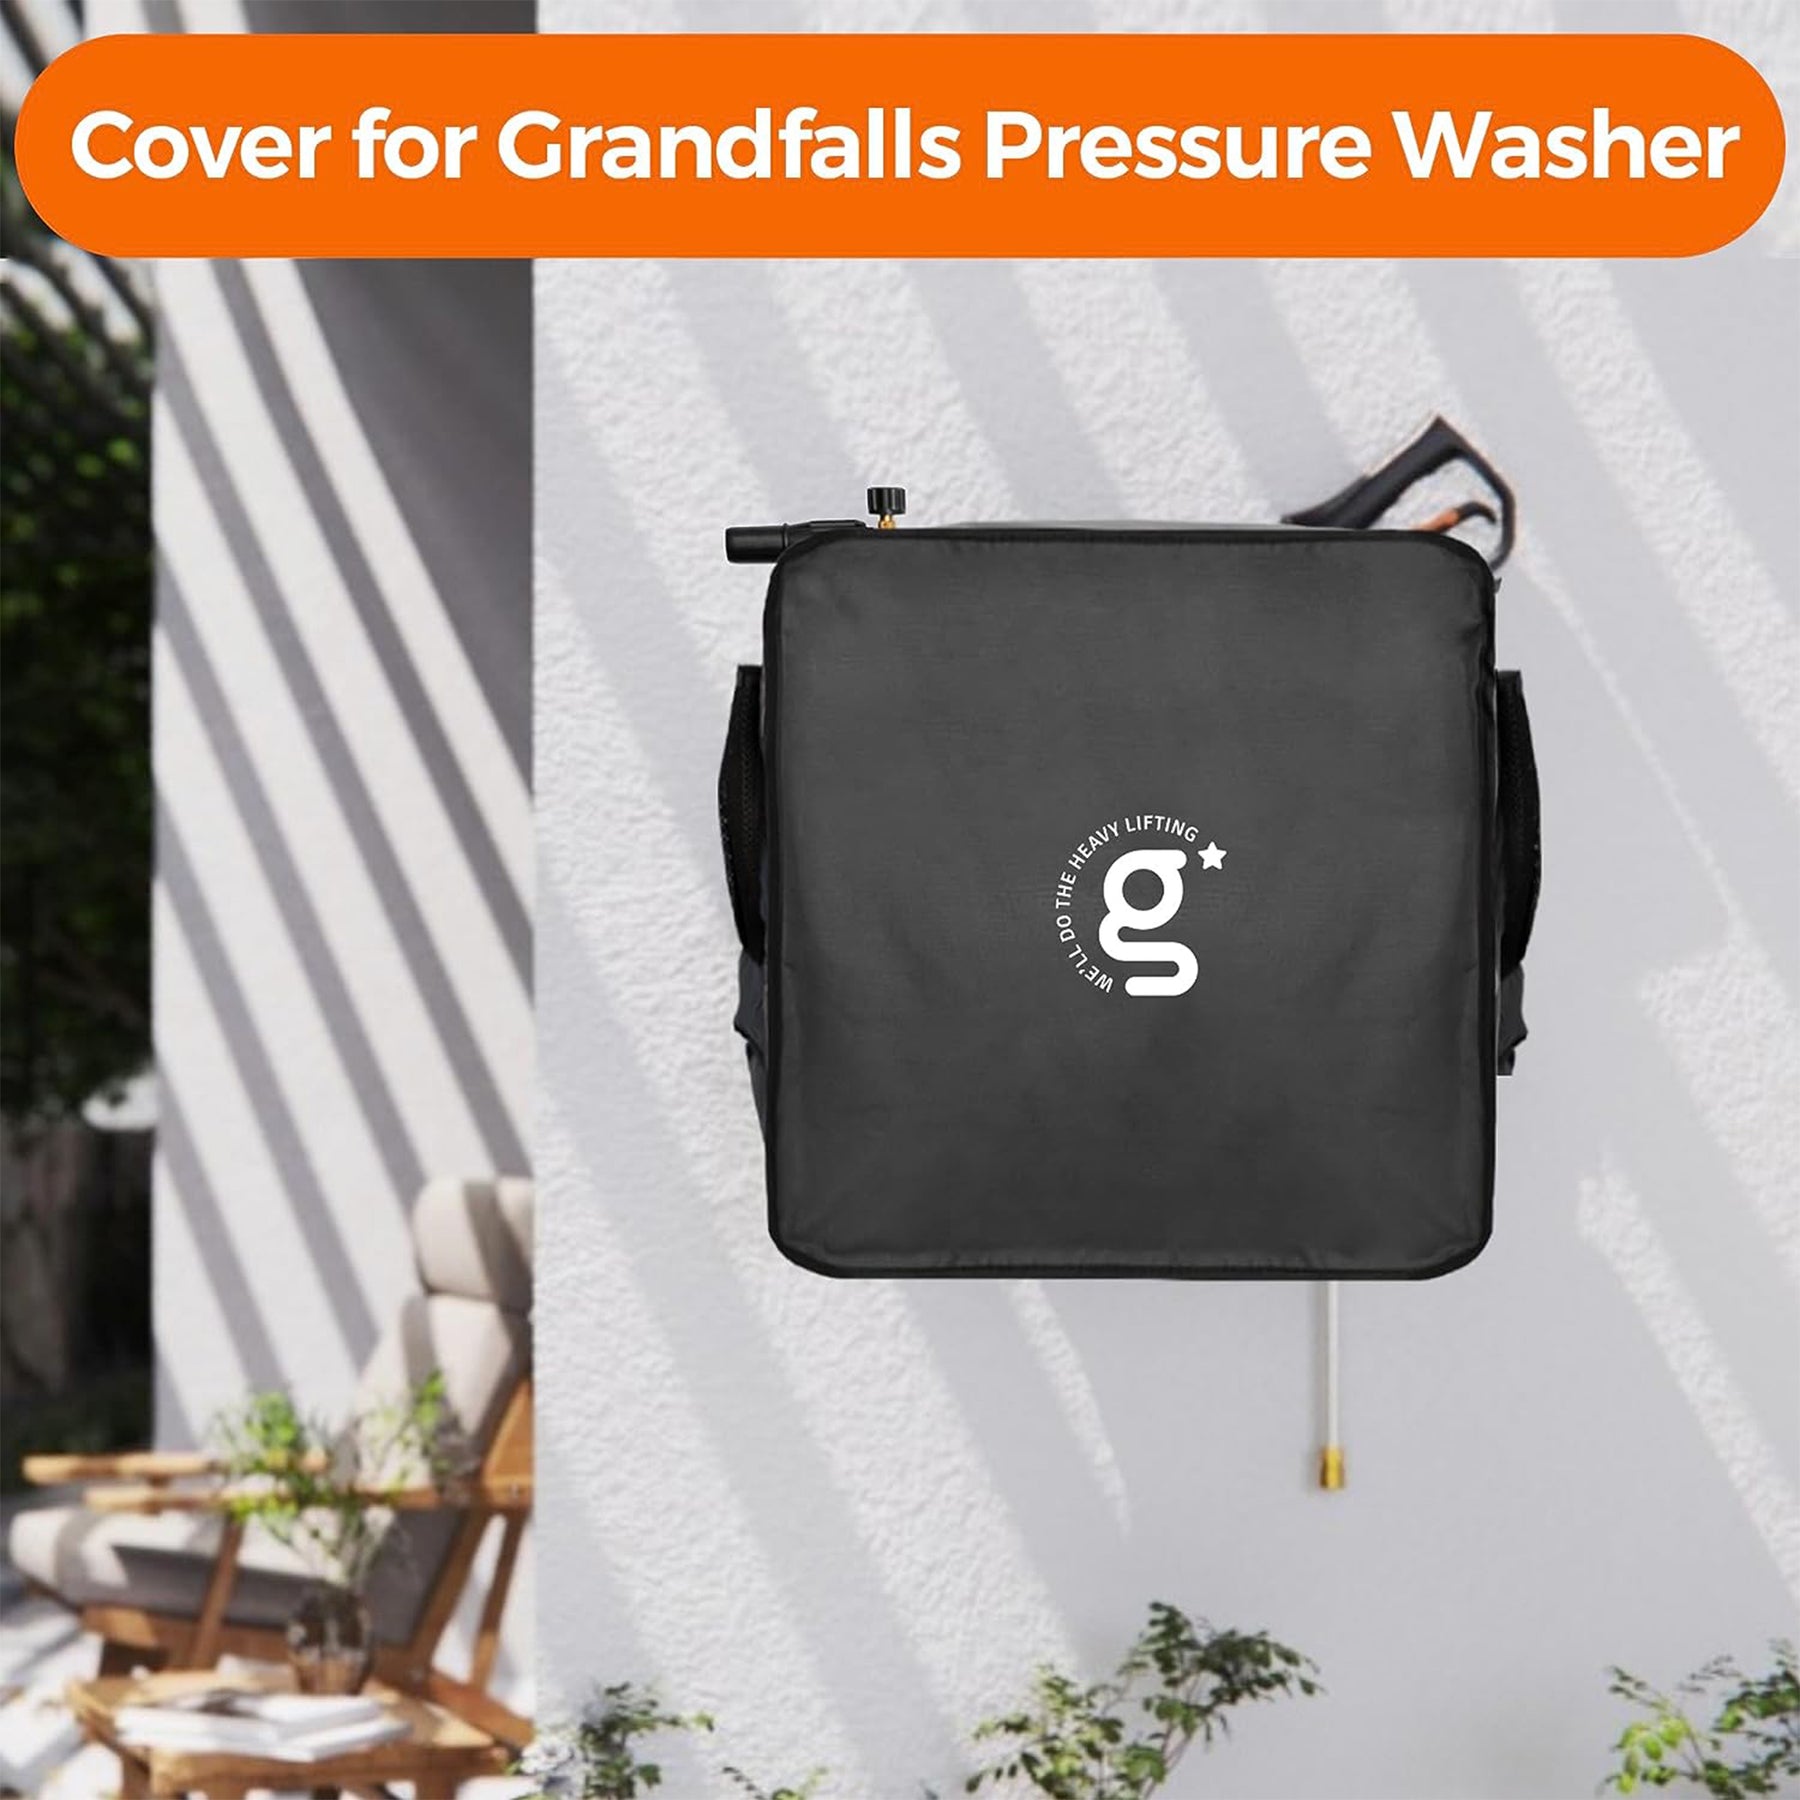  Giraffe Tools Grandfalls Pressure Washer Plus, Wall